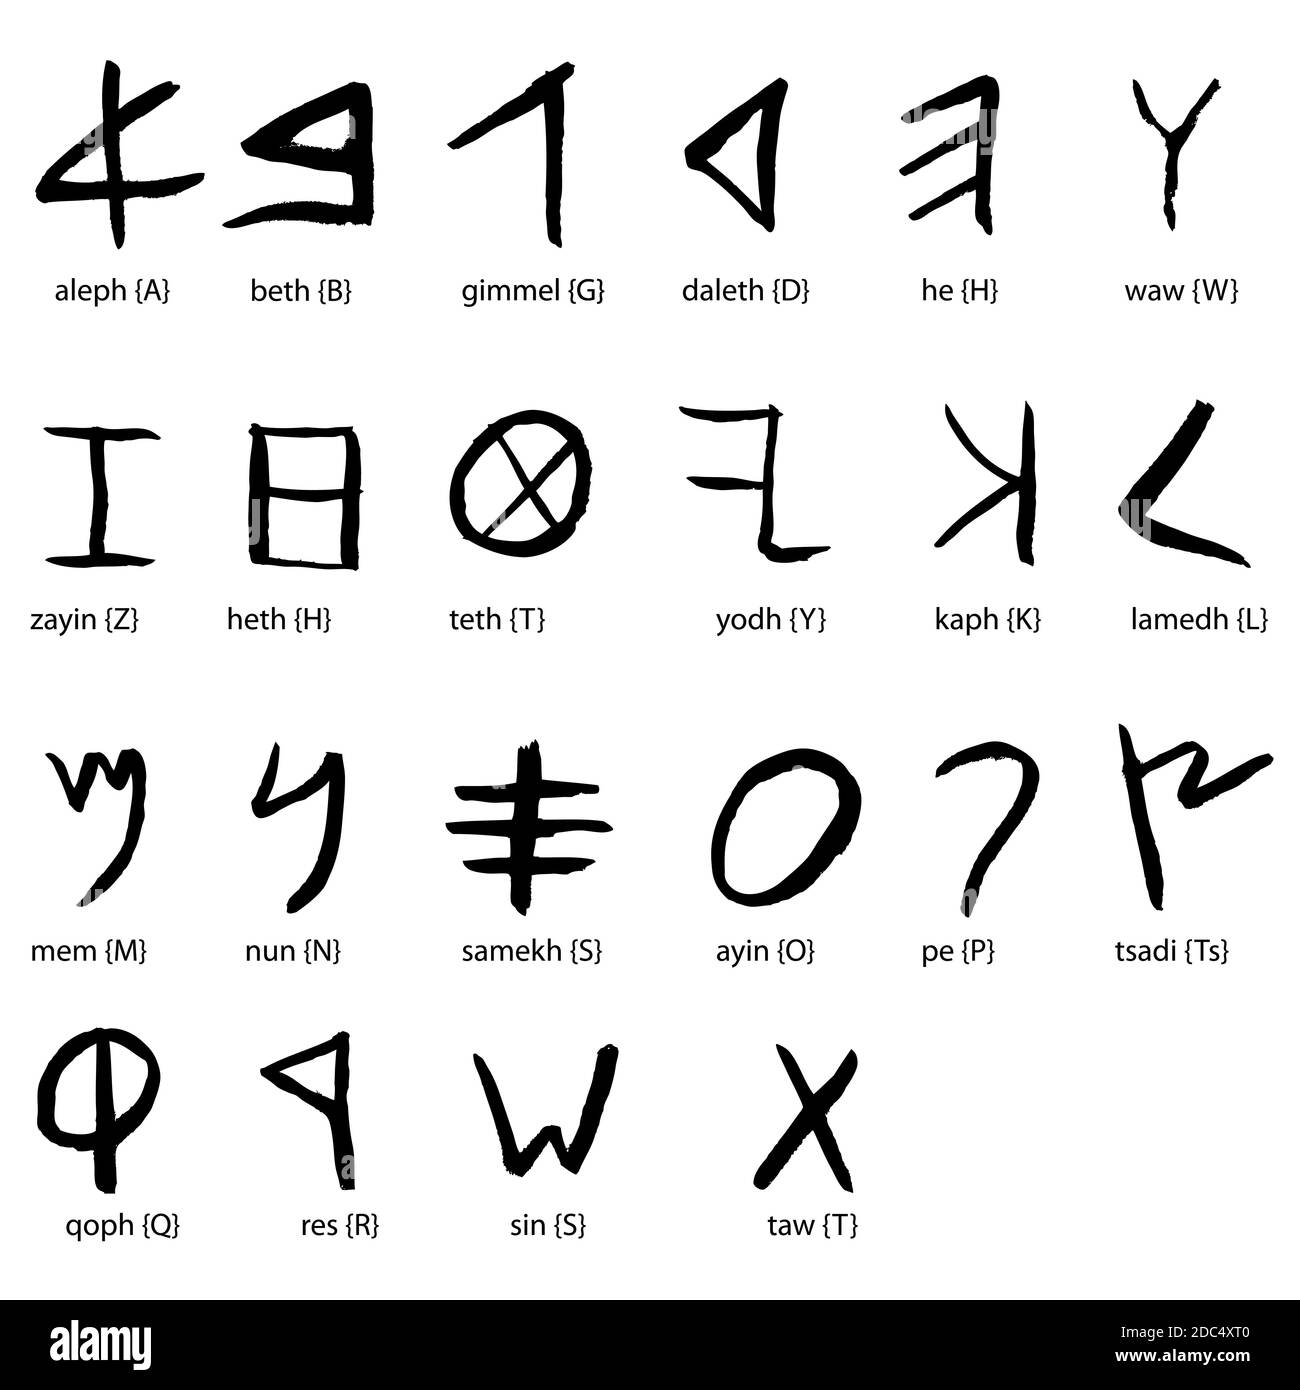 Phoenician Alphabet Font